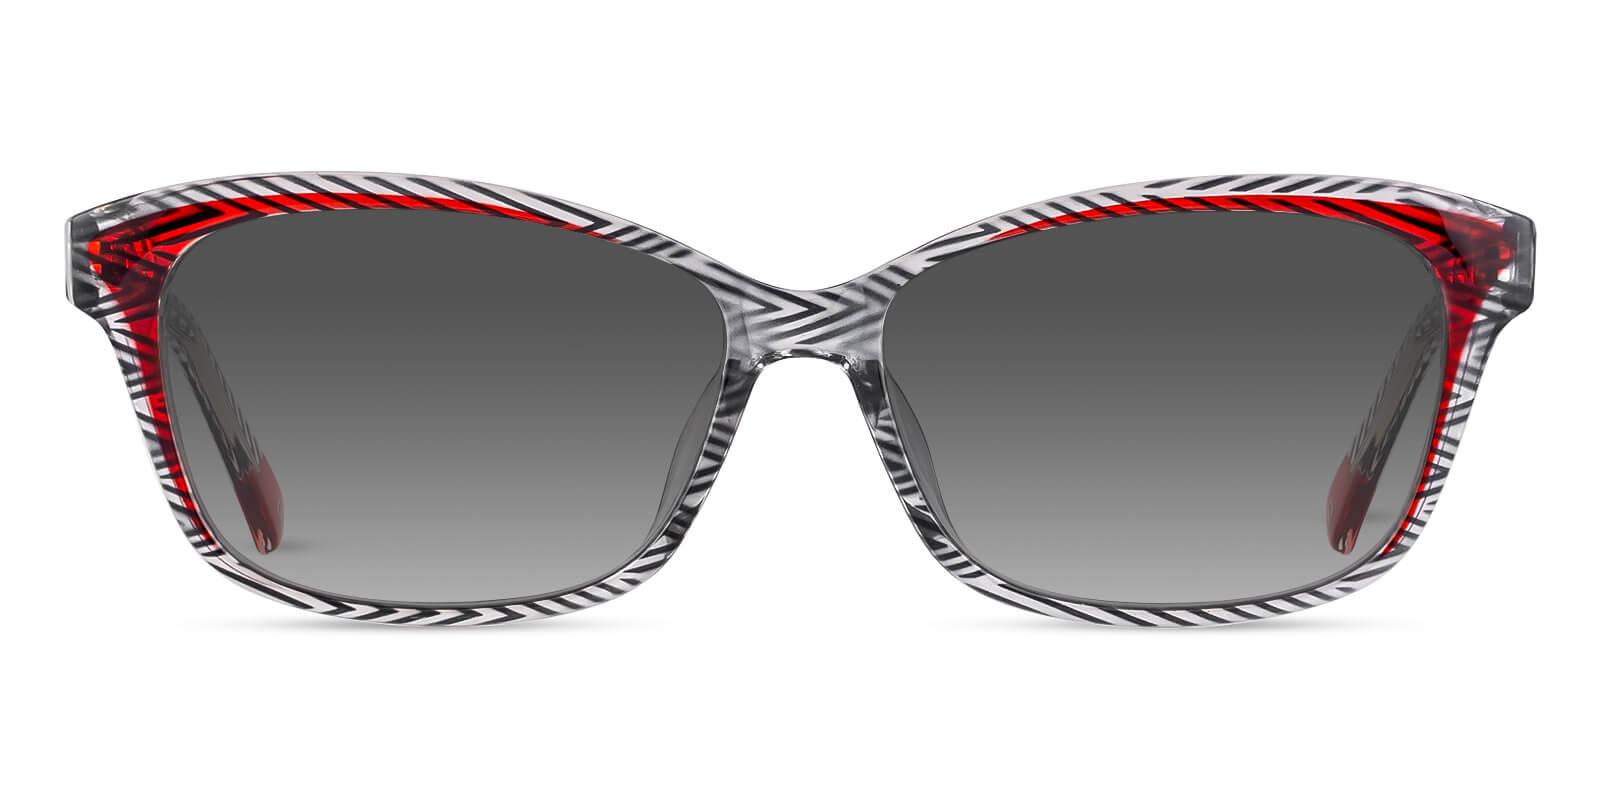 Dazzle Pattern Plastic Sunglasses , UniversalBridgeFit Frames from ABBE Glasses